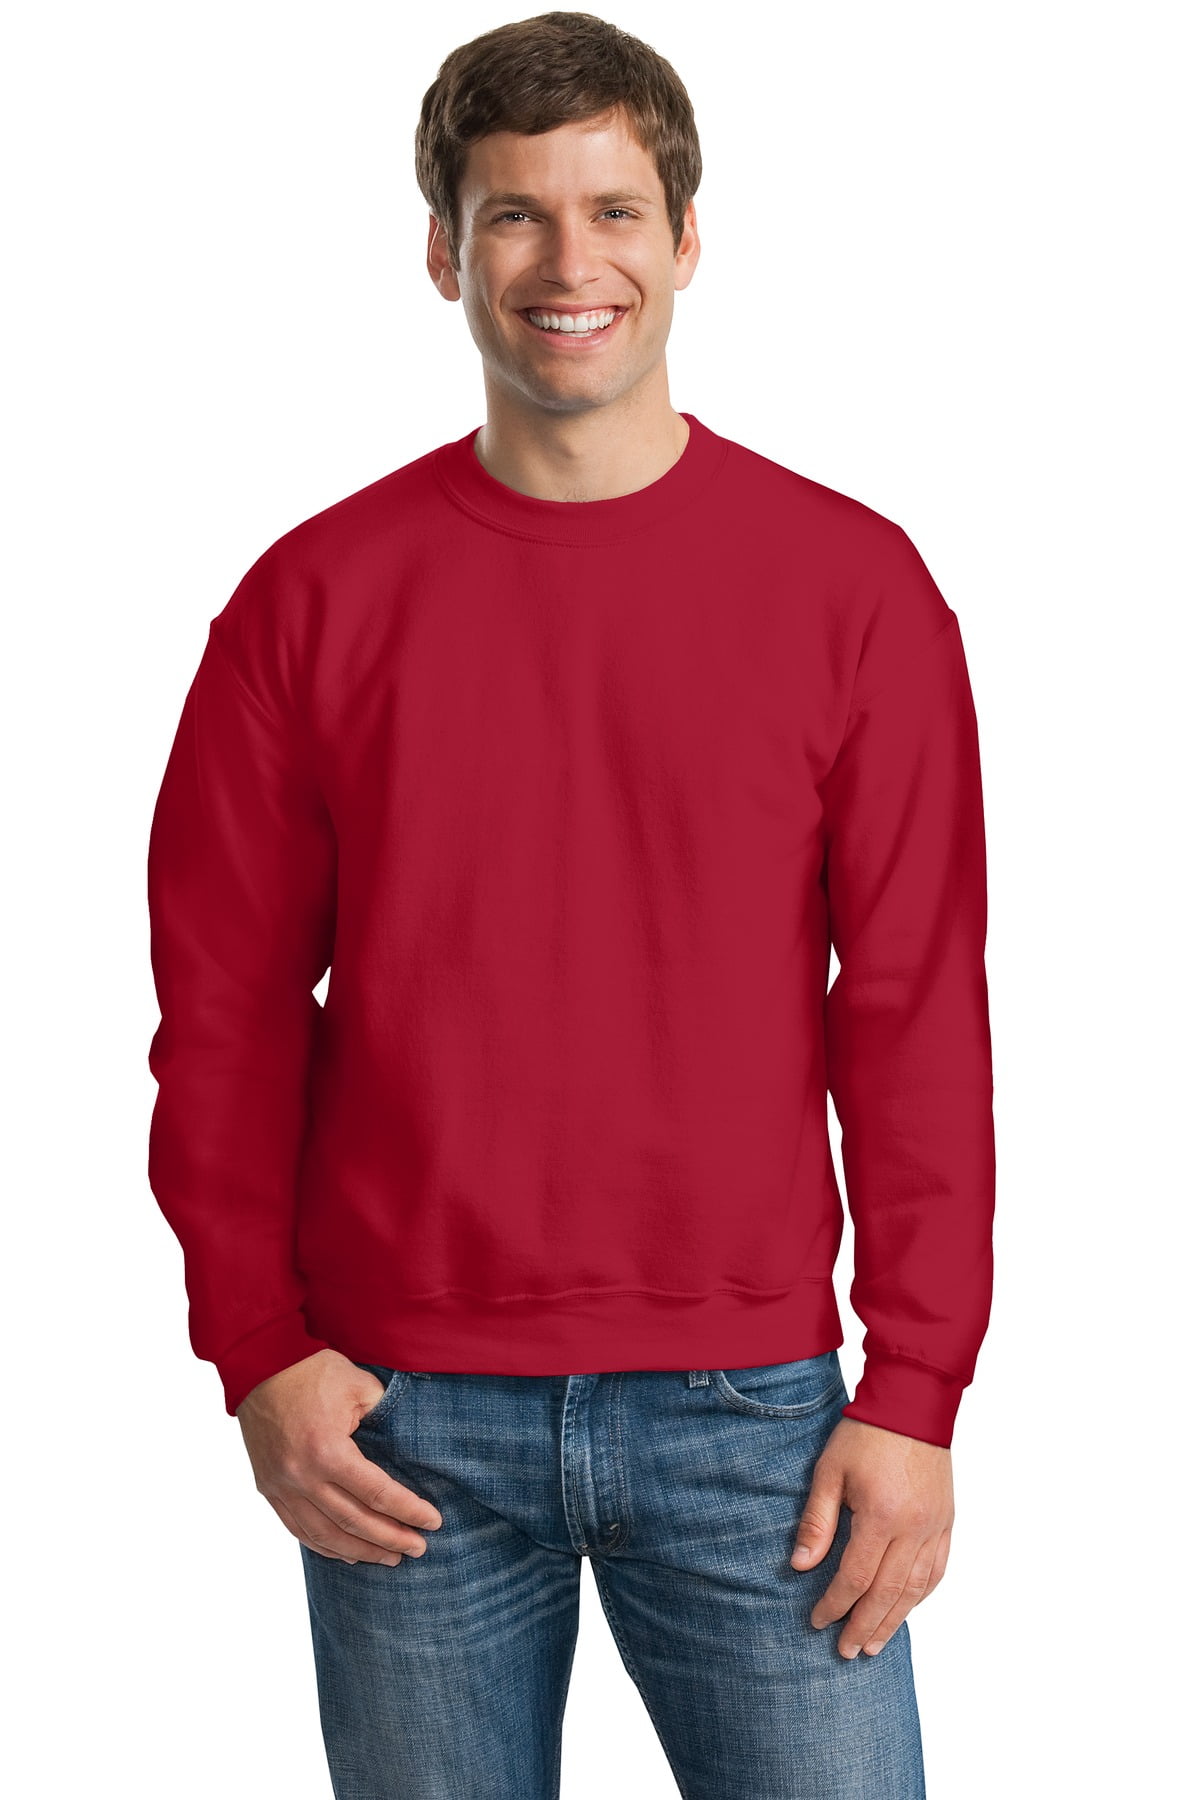 Gildan Activewear - Gildan Activewear 50/50 Crewneck Sweatshirt. Cherry ...